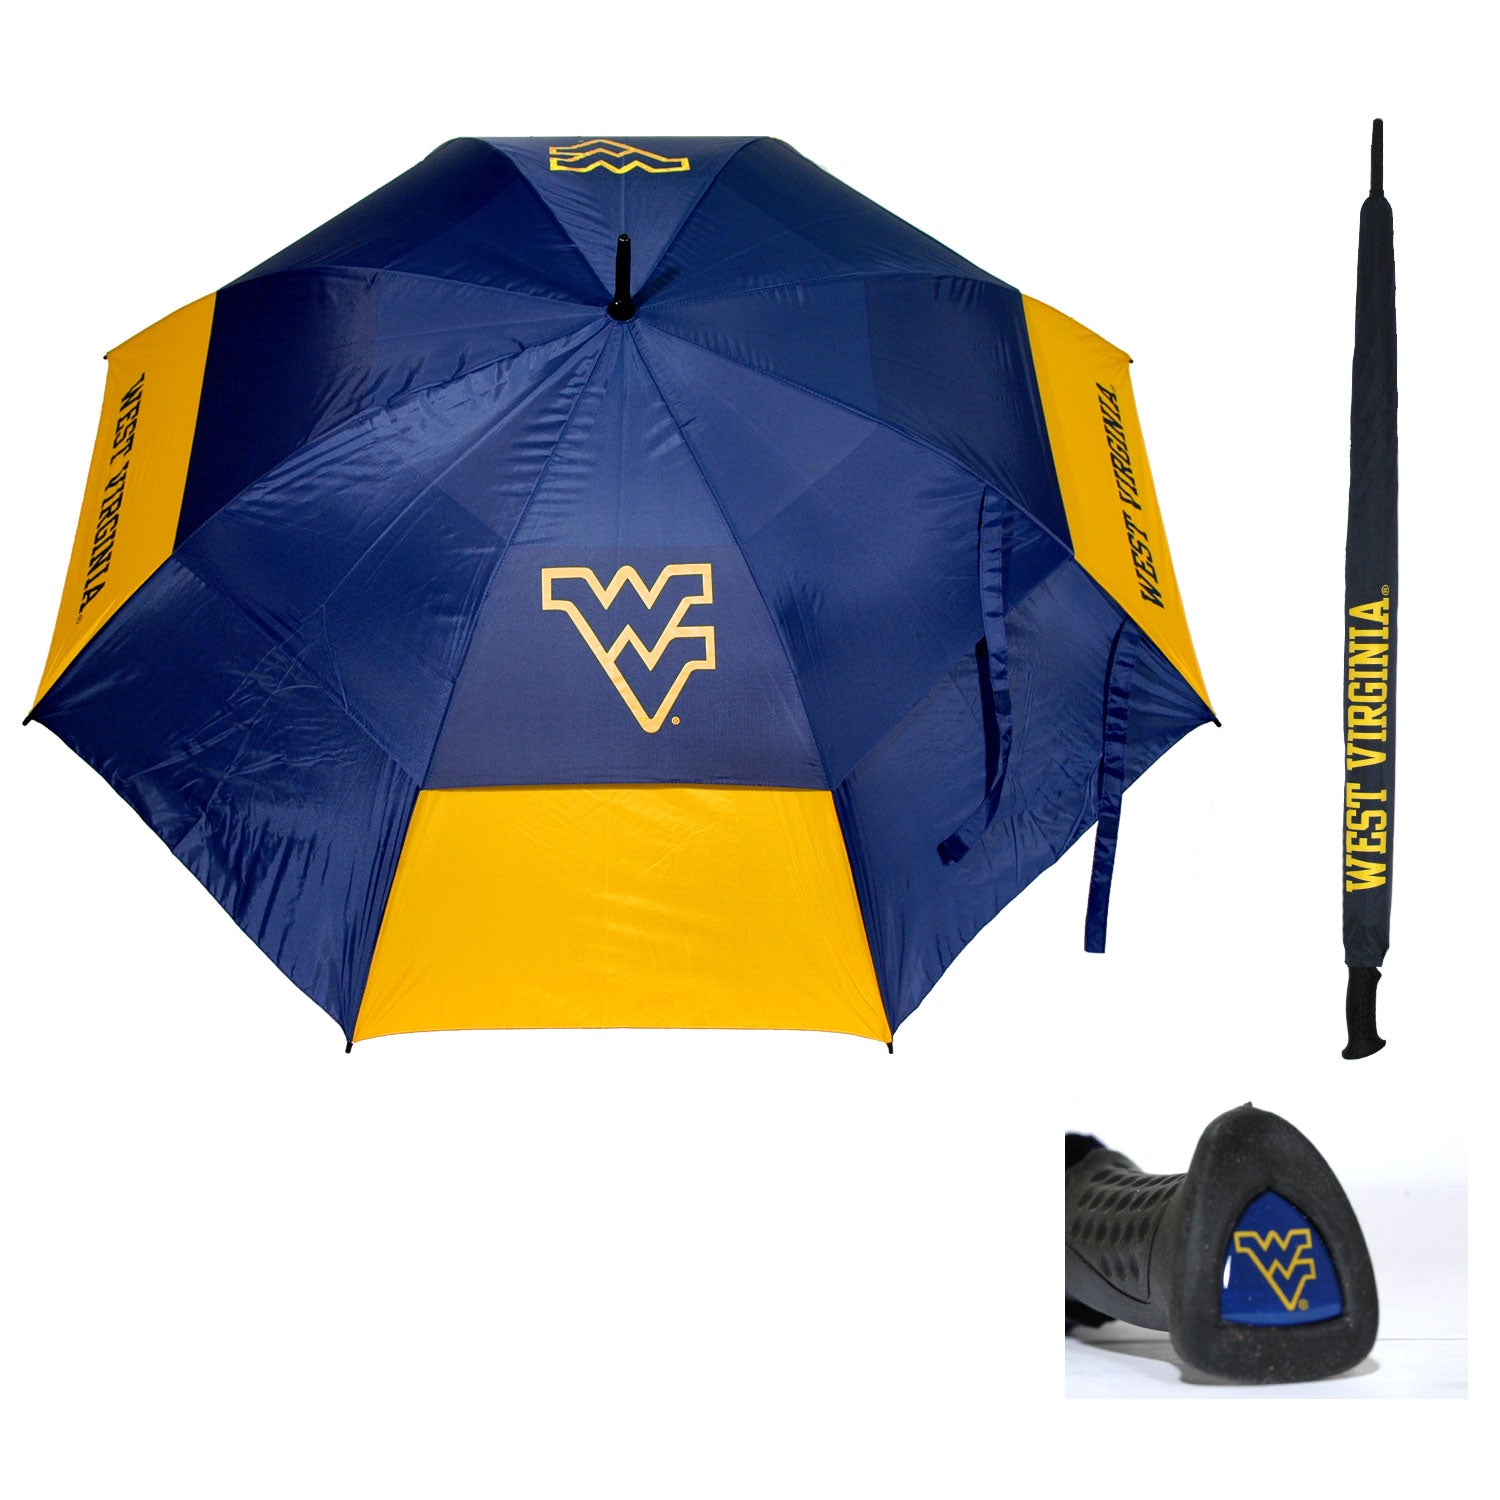 West Virginia Mountaineers Umbrella